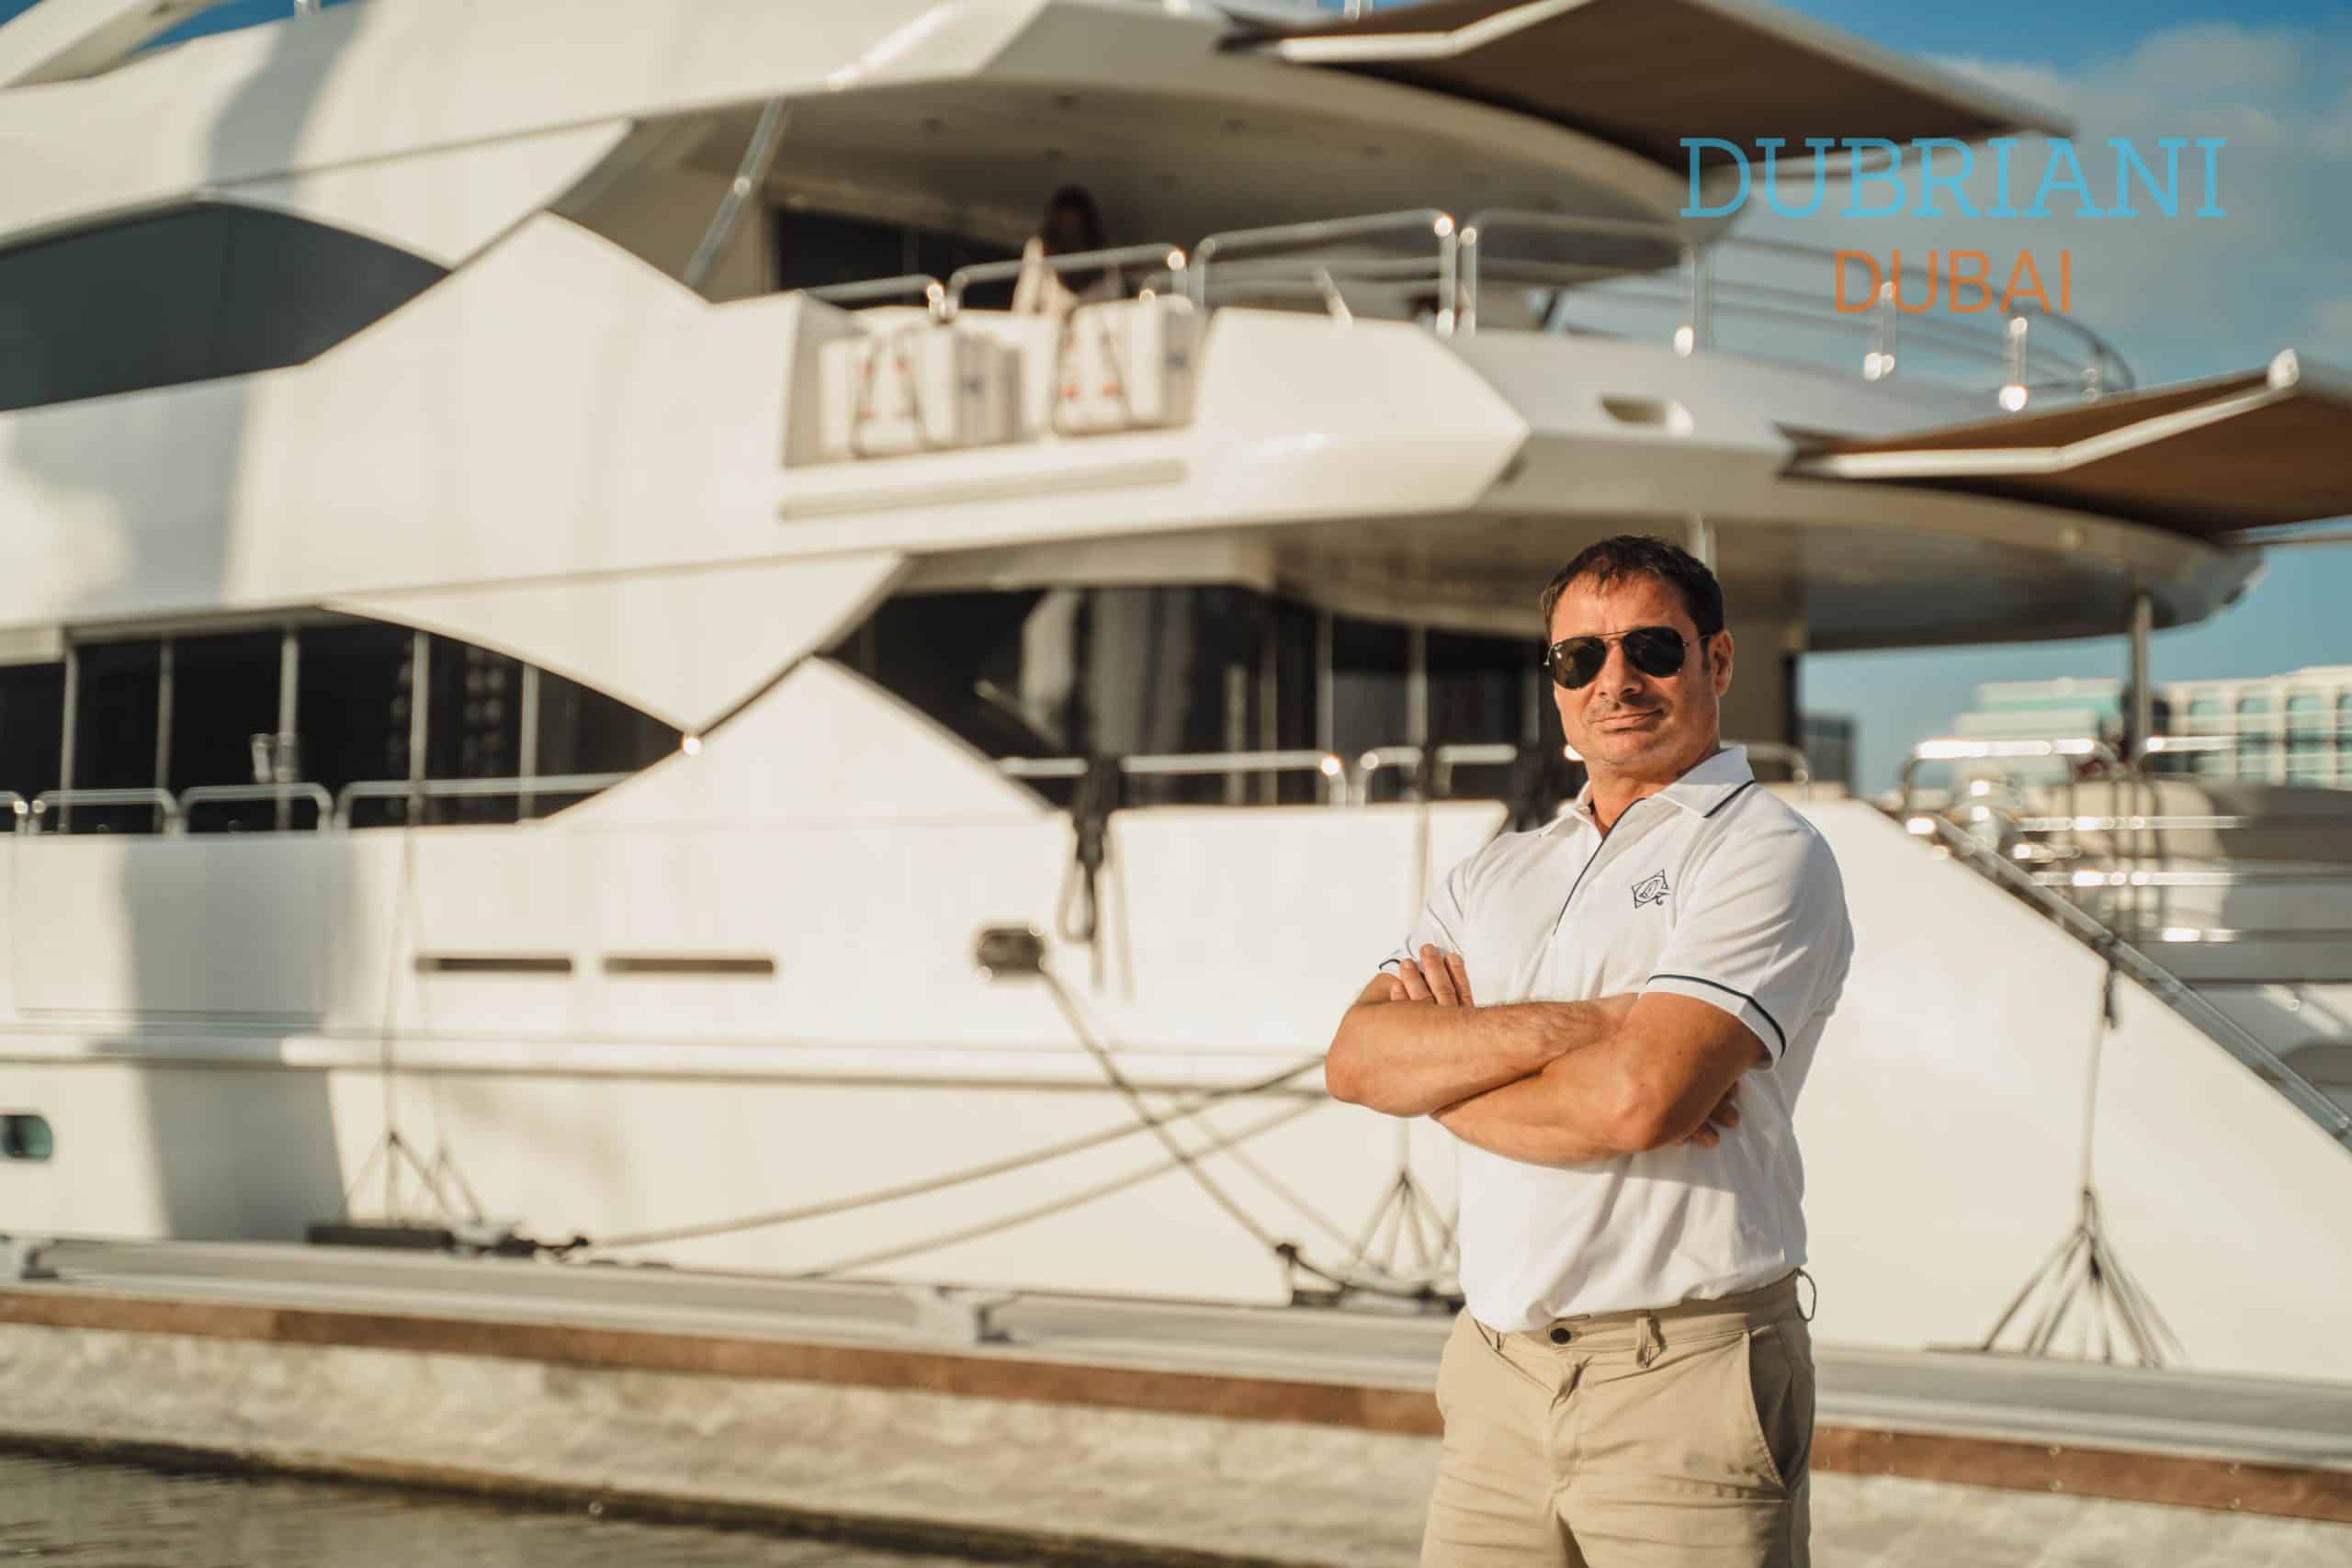 Luxury Yacht Charter in Dubai